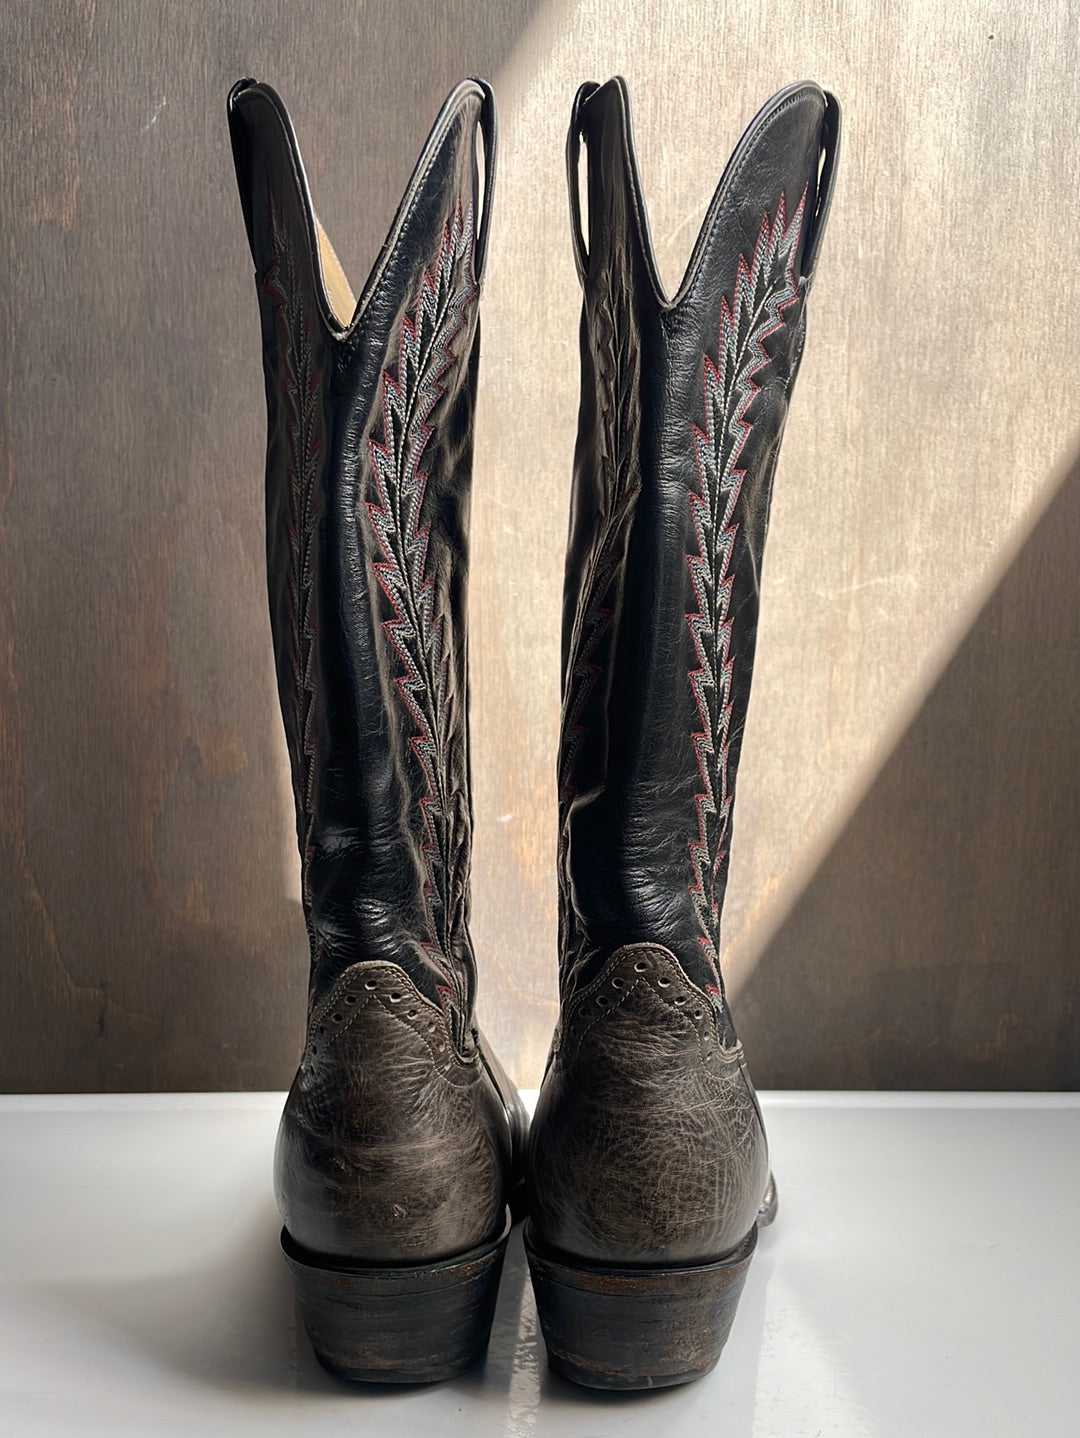 Hondo Black and Gray Boots